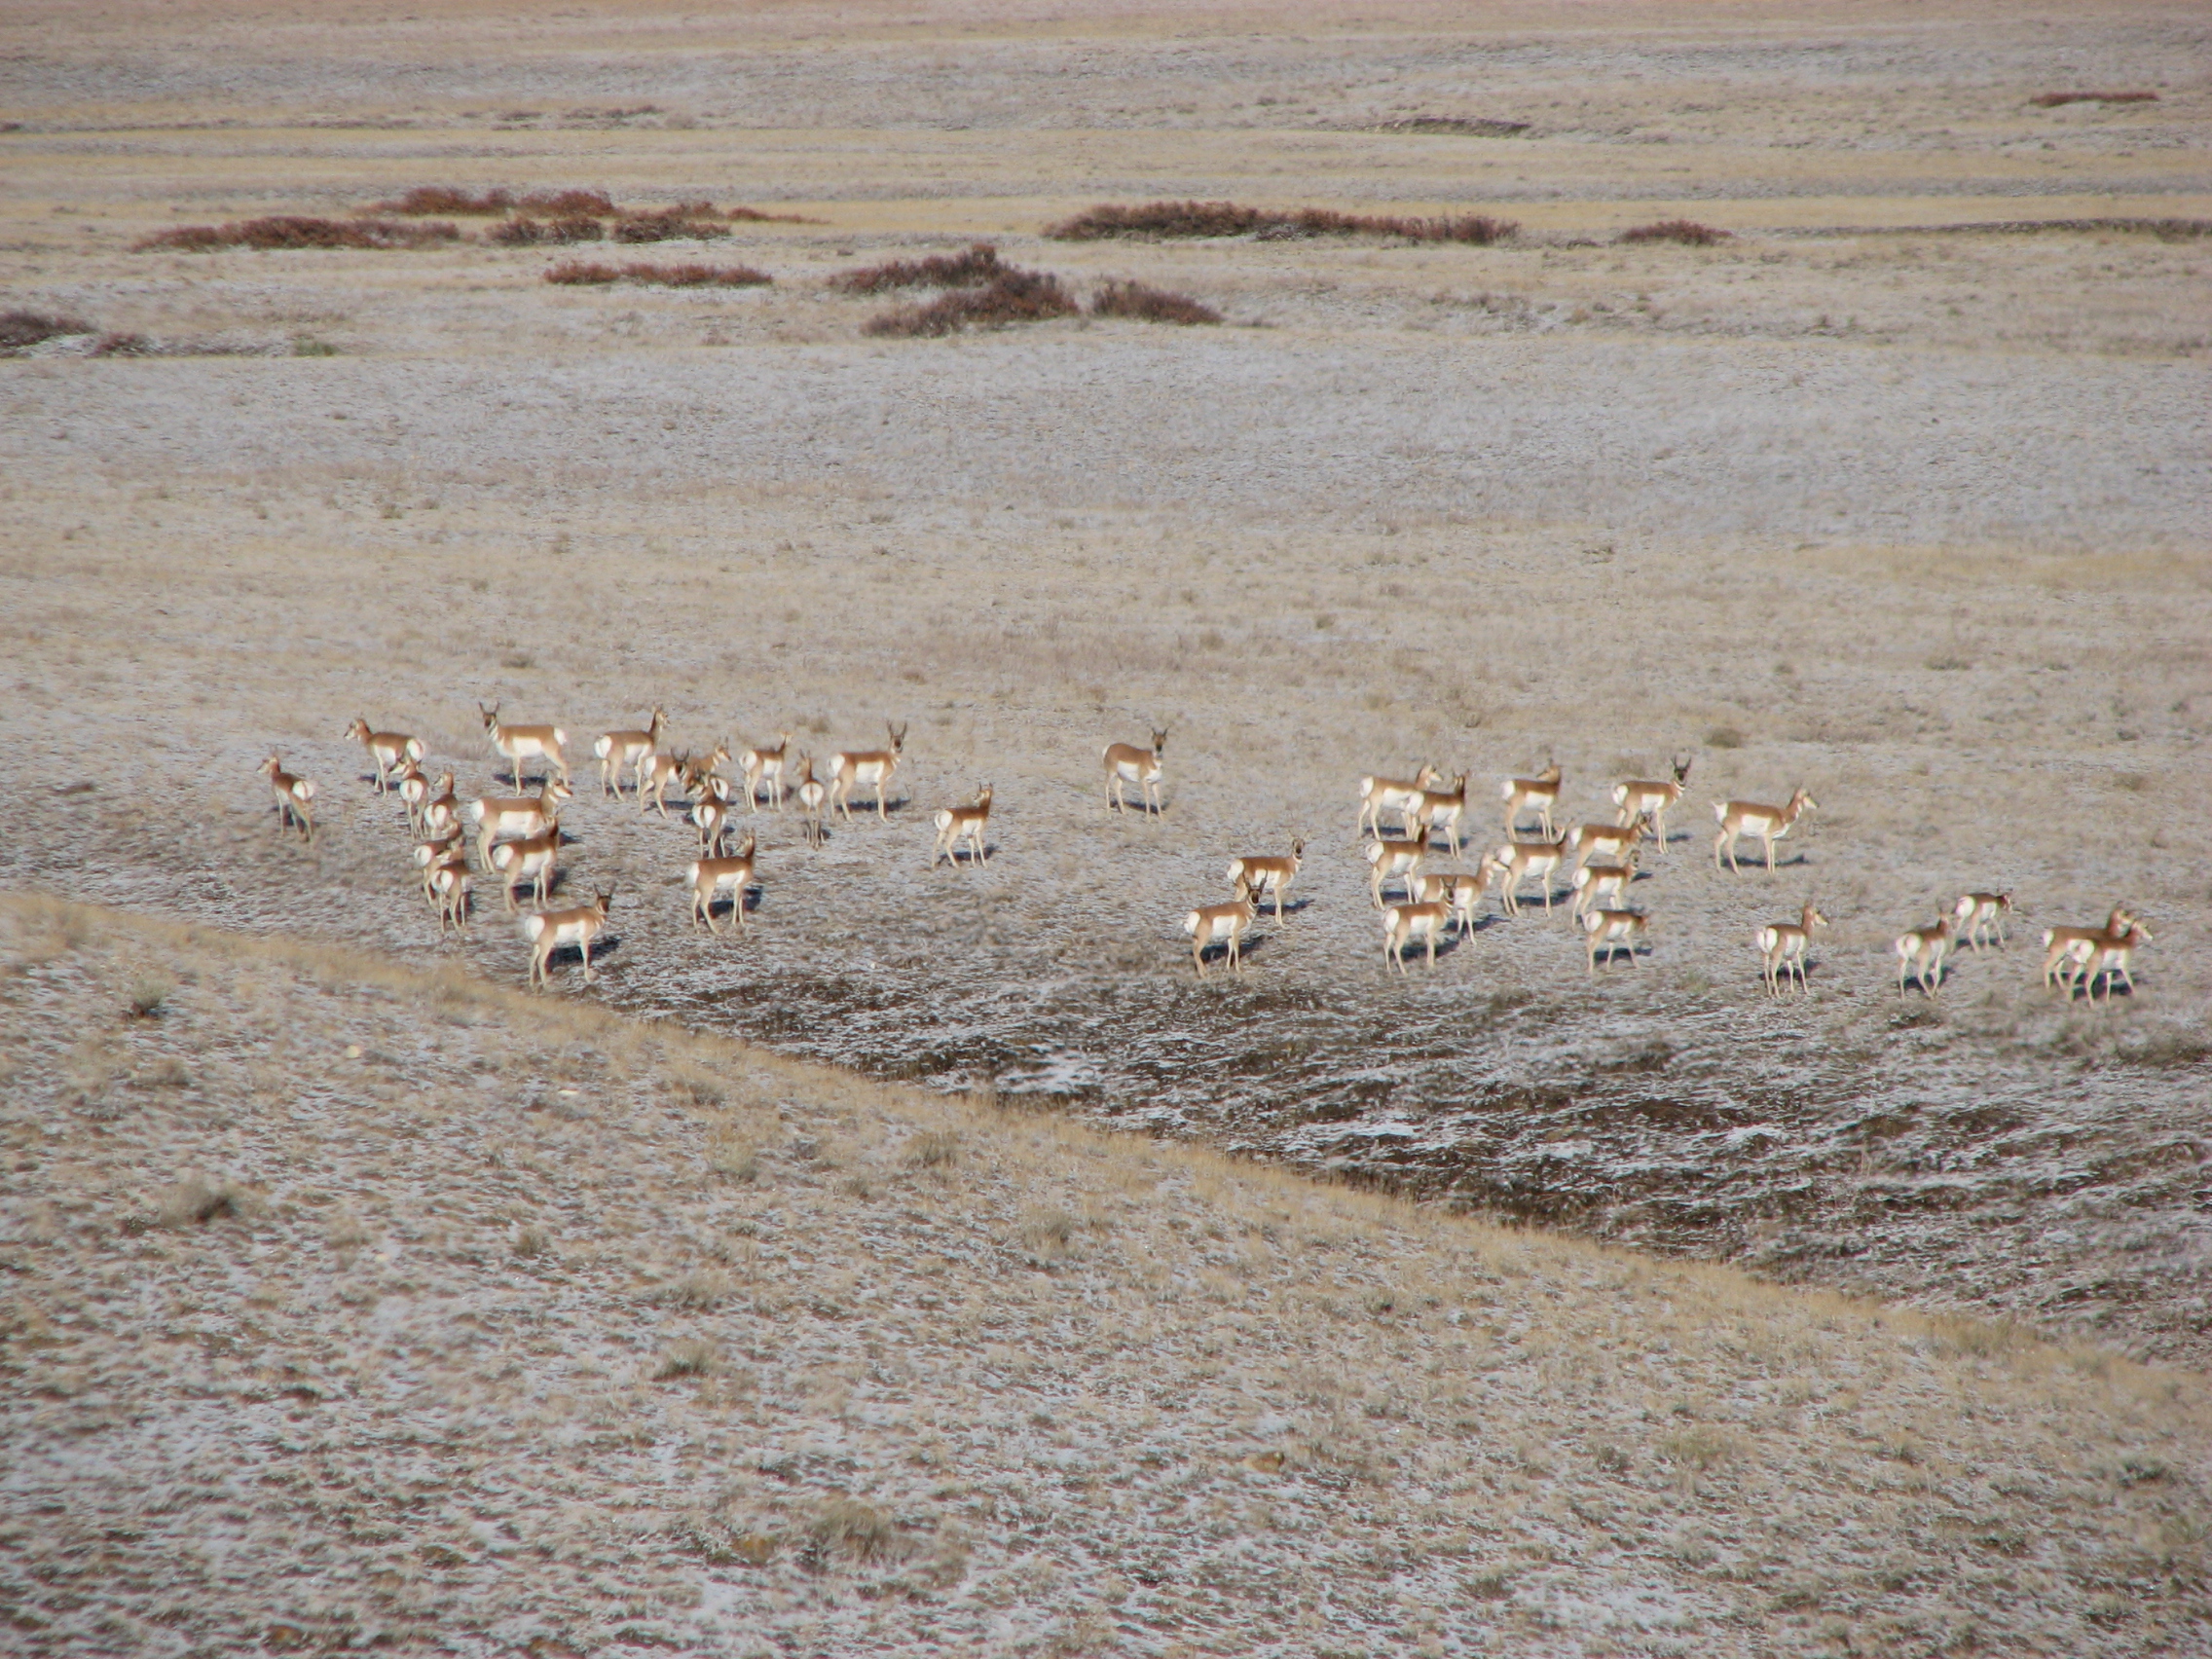 Herd of antelope